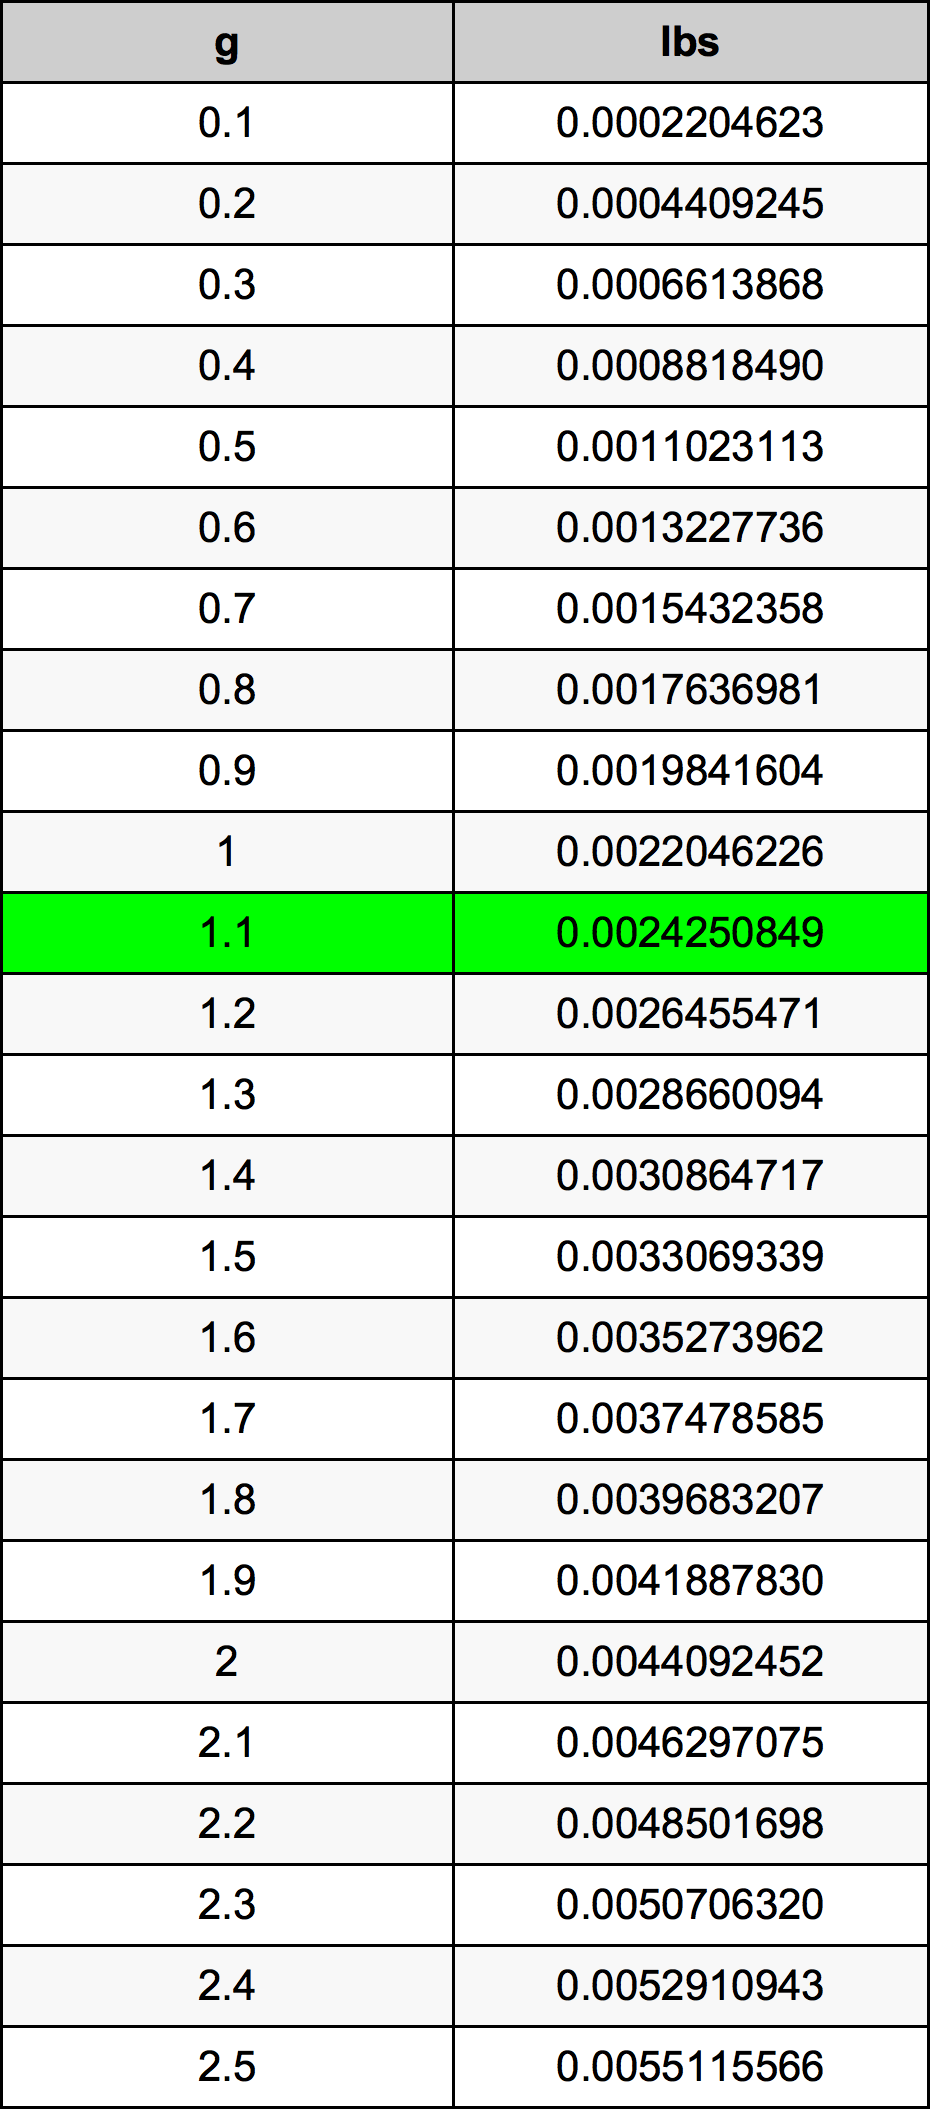 1.1 غرام جدول تحويل